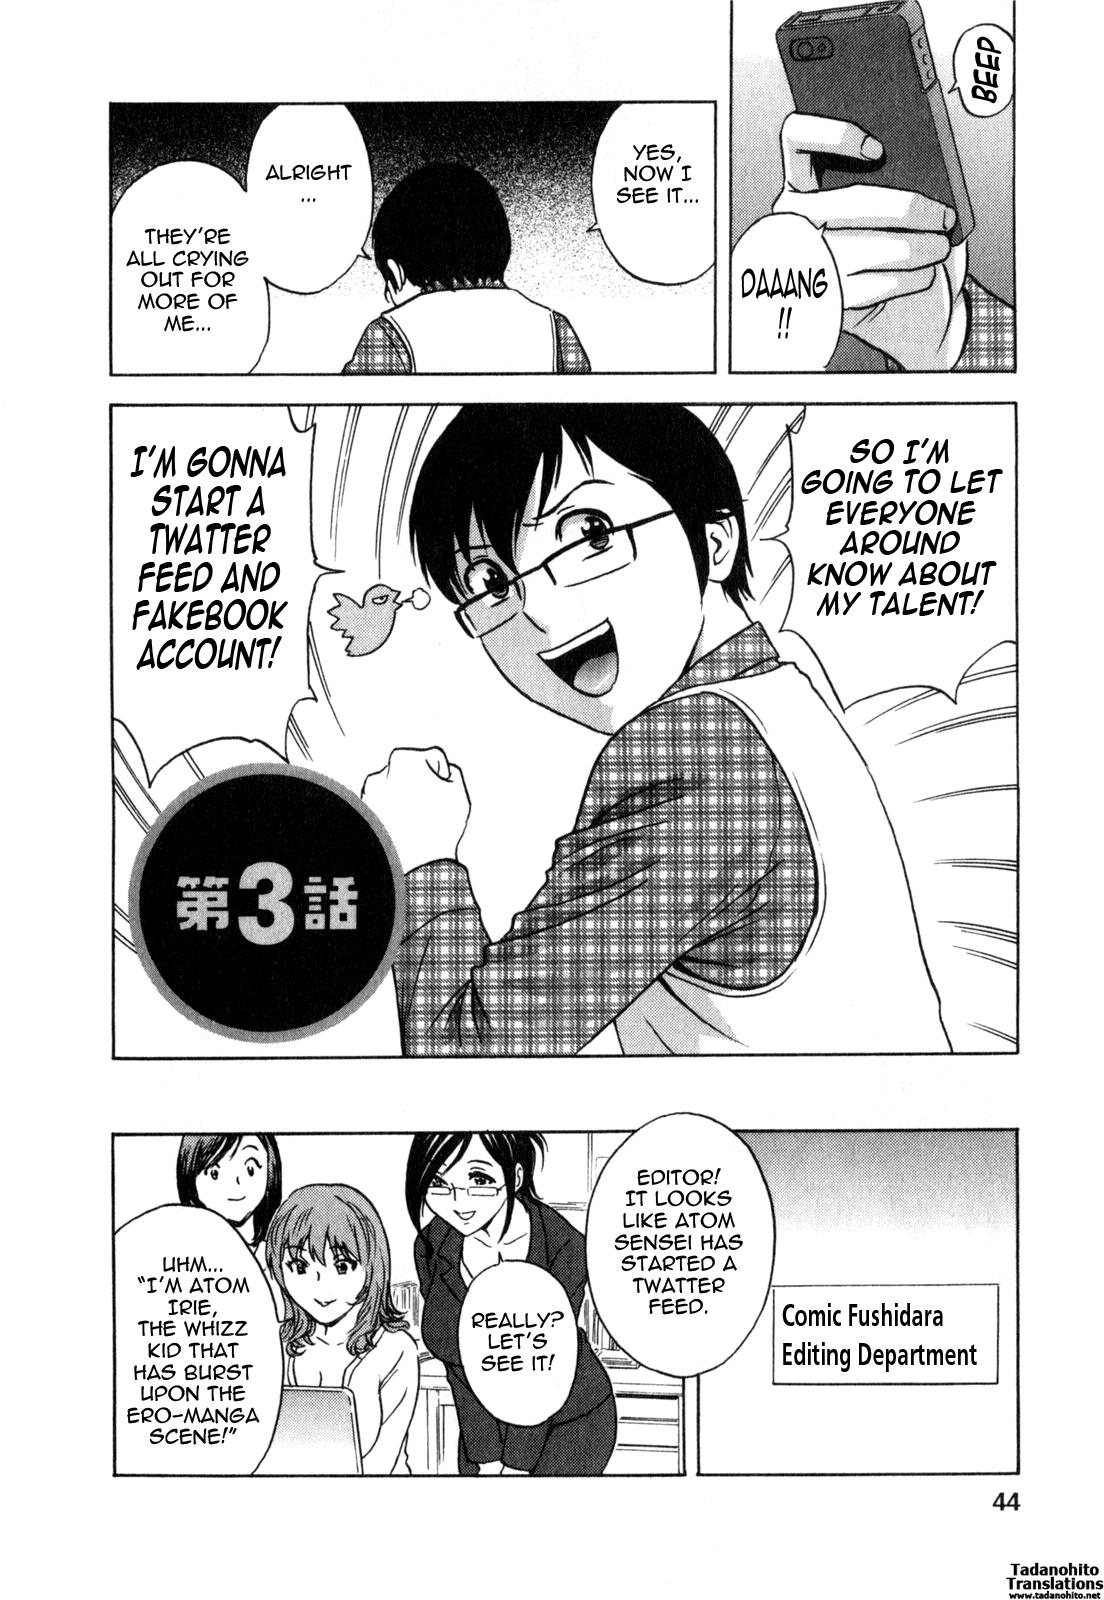 Life with Married Women Just Like a Manga 3 45